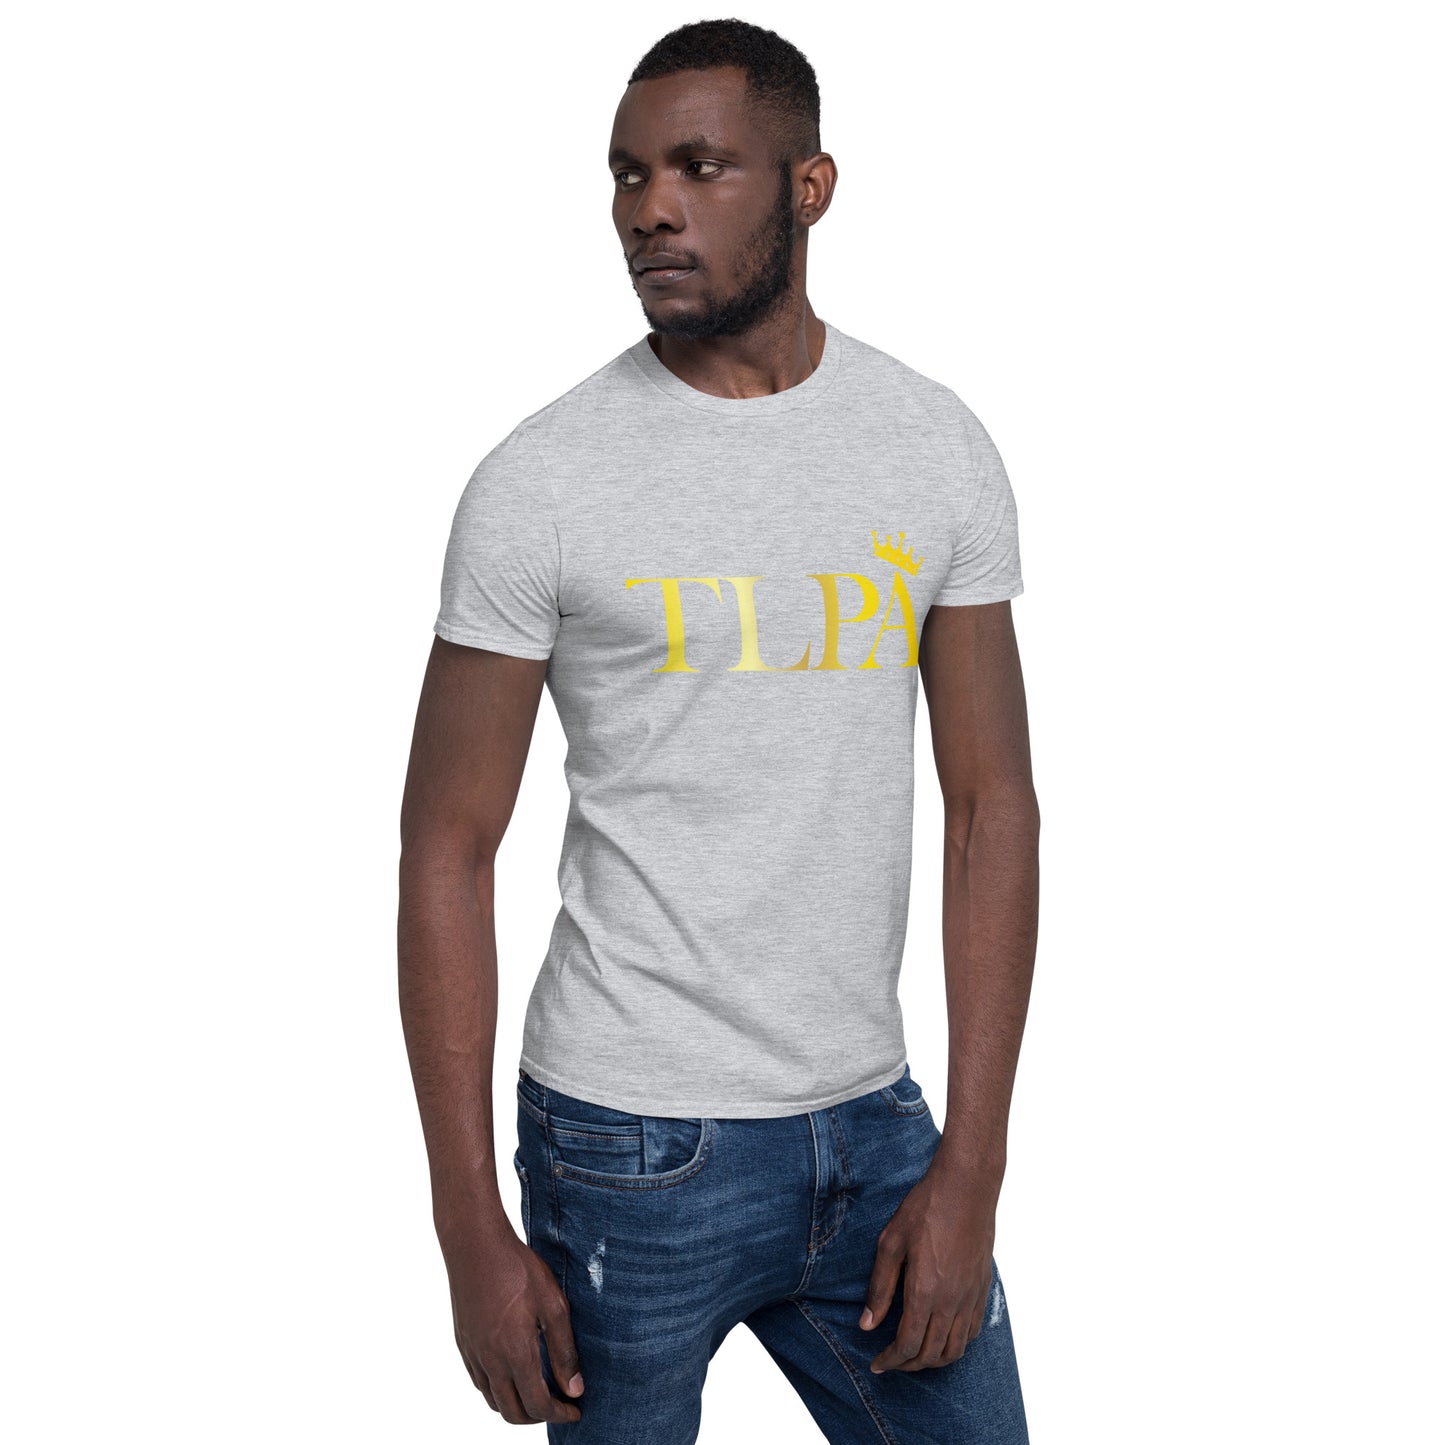 TLPA Short-Sleeve Unisex T-Shirt - SHOPTLPA.COM